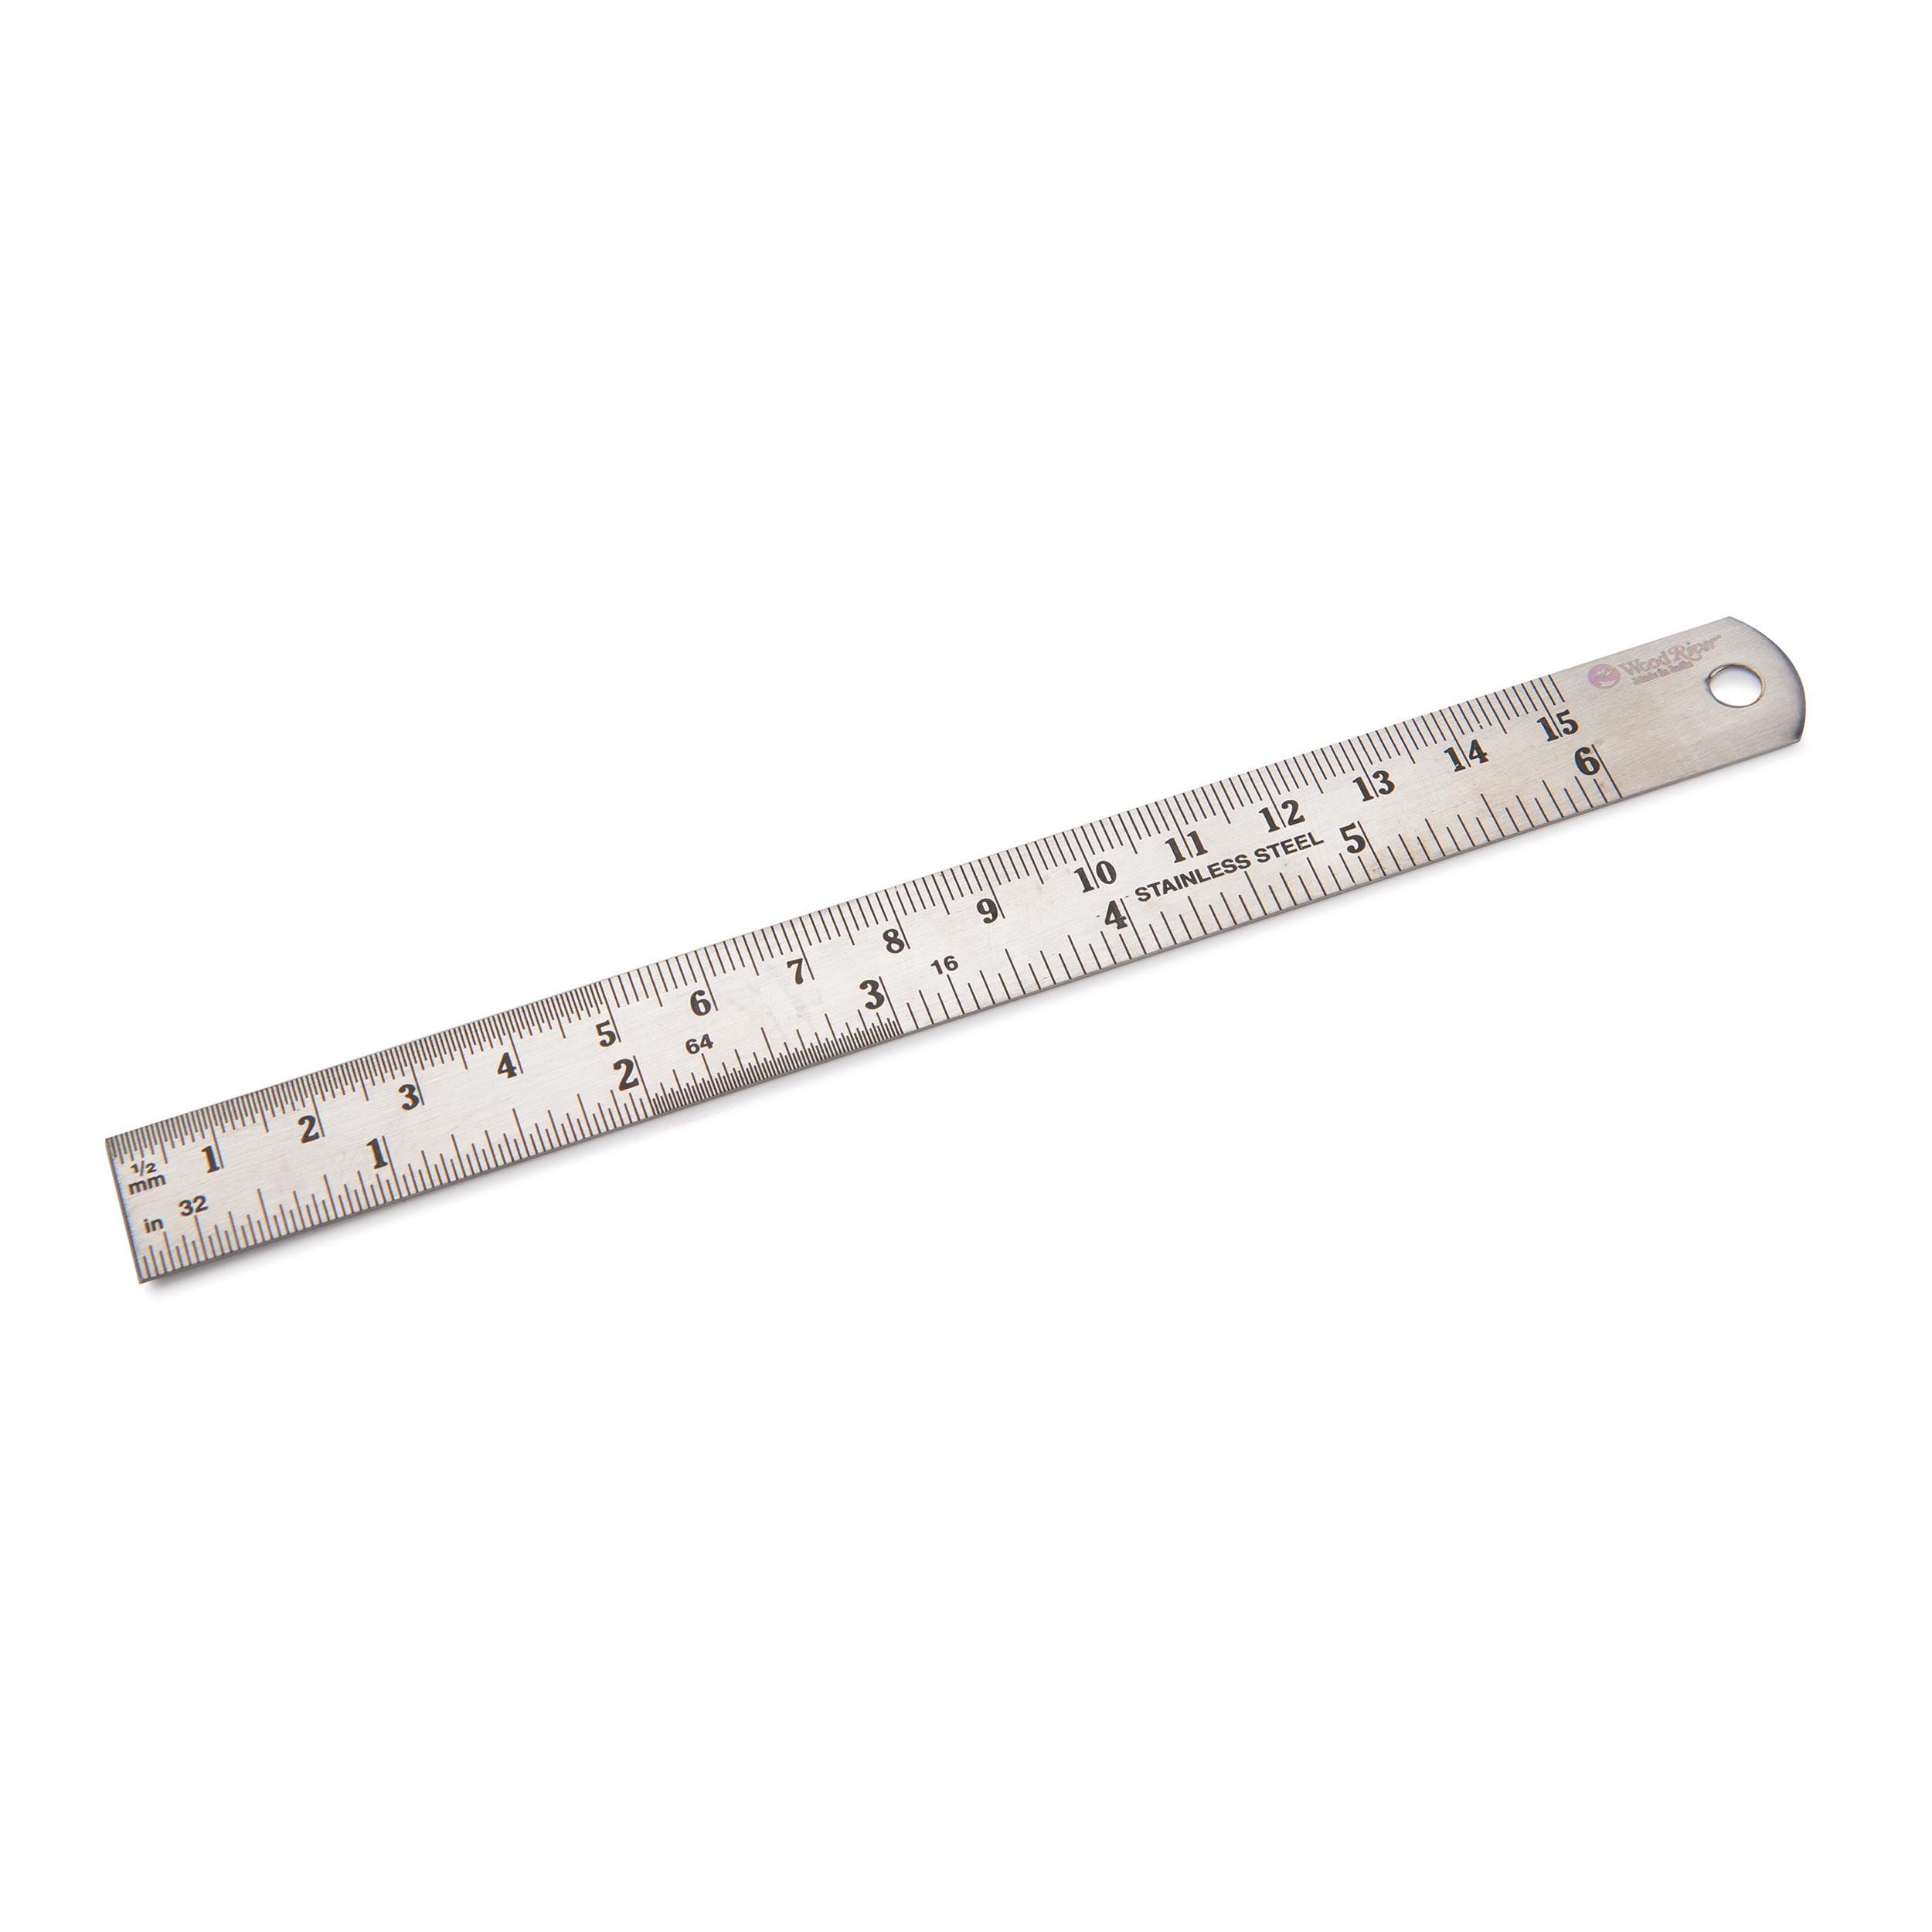 Dekton 150mm Stainless Steel Ruler Metal Ruler 